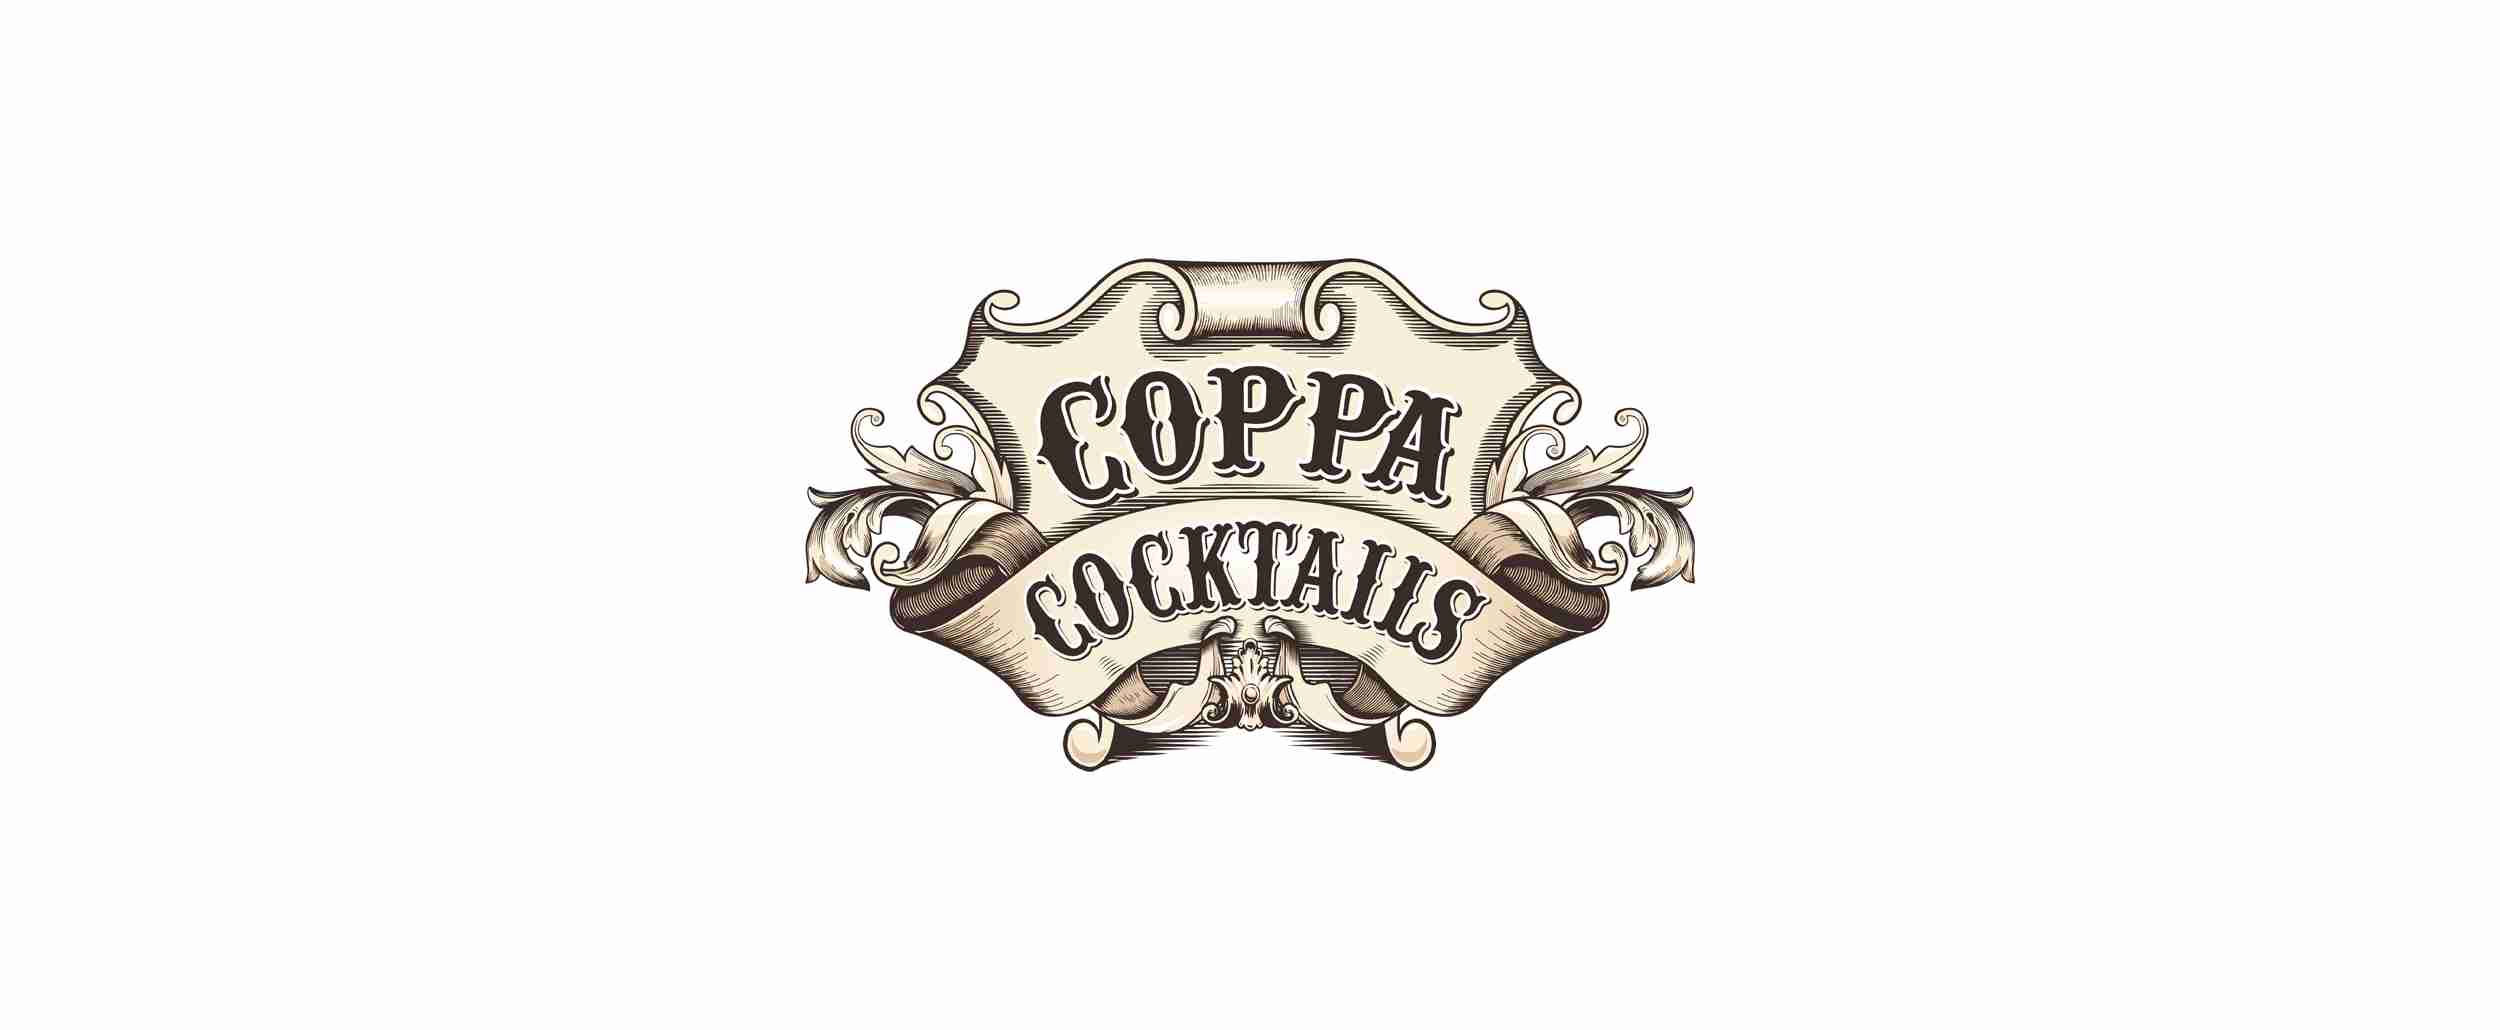 COPPA COCKTAILS